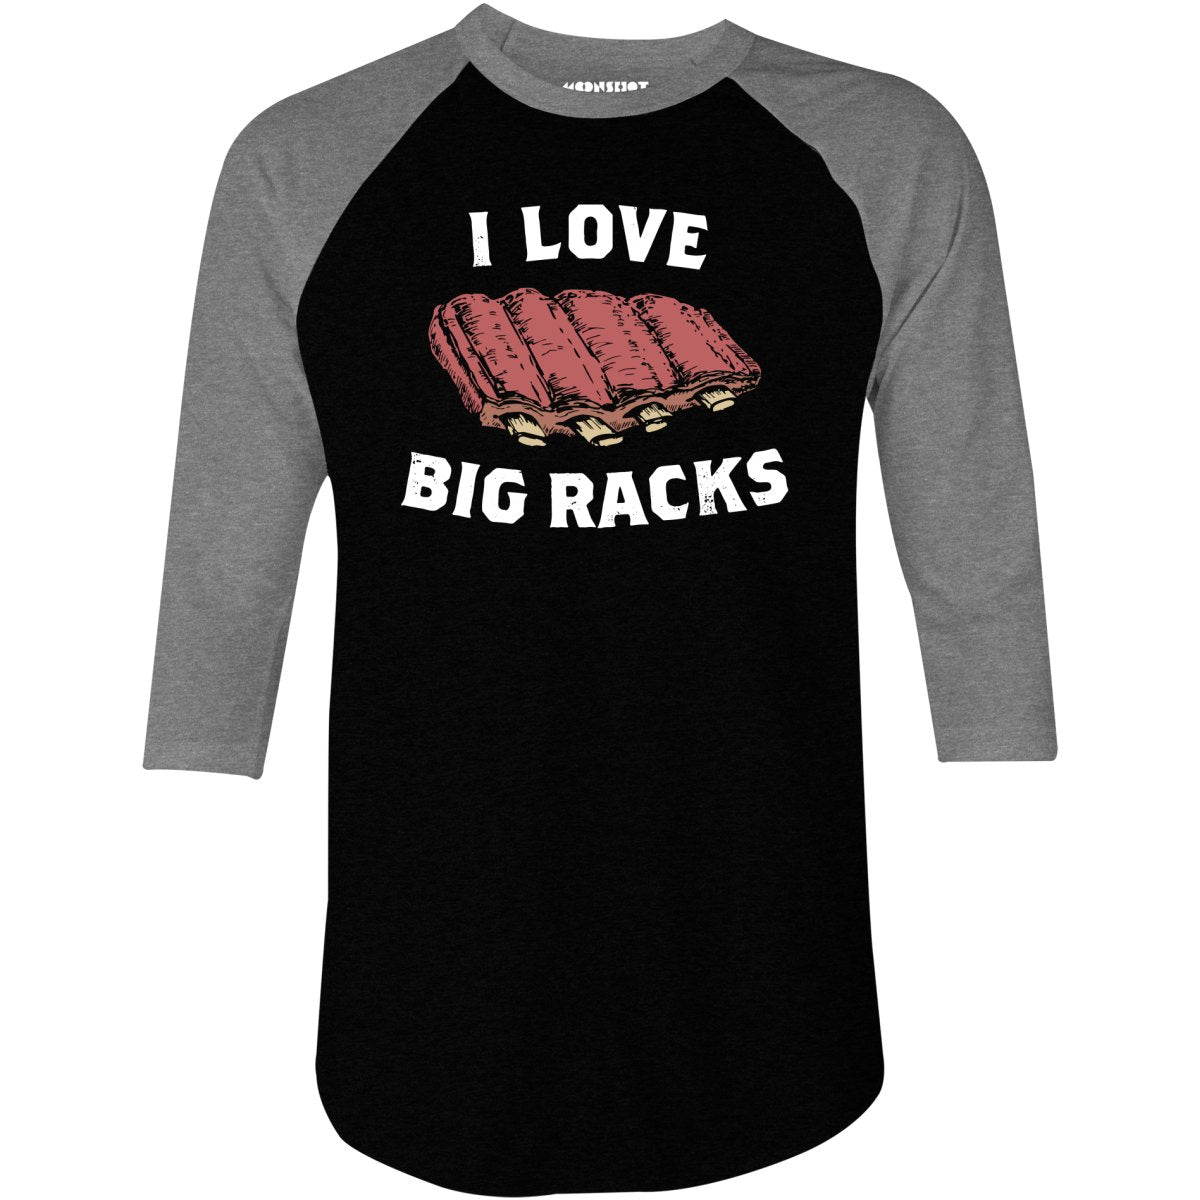 I Love Big Racks - 3/4 Sleeve Raglan T-Shirt